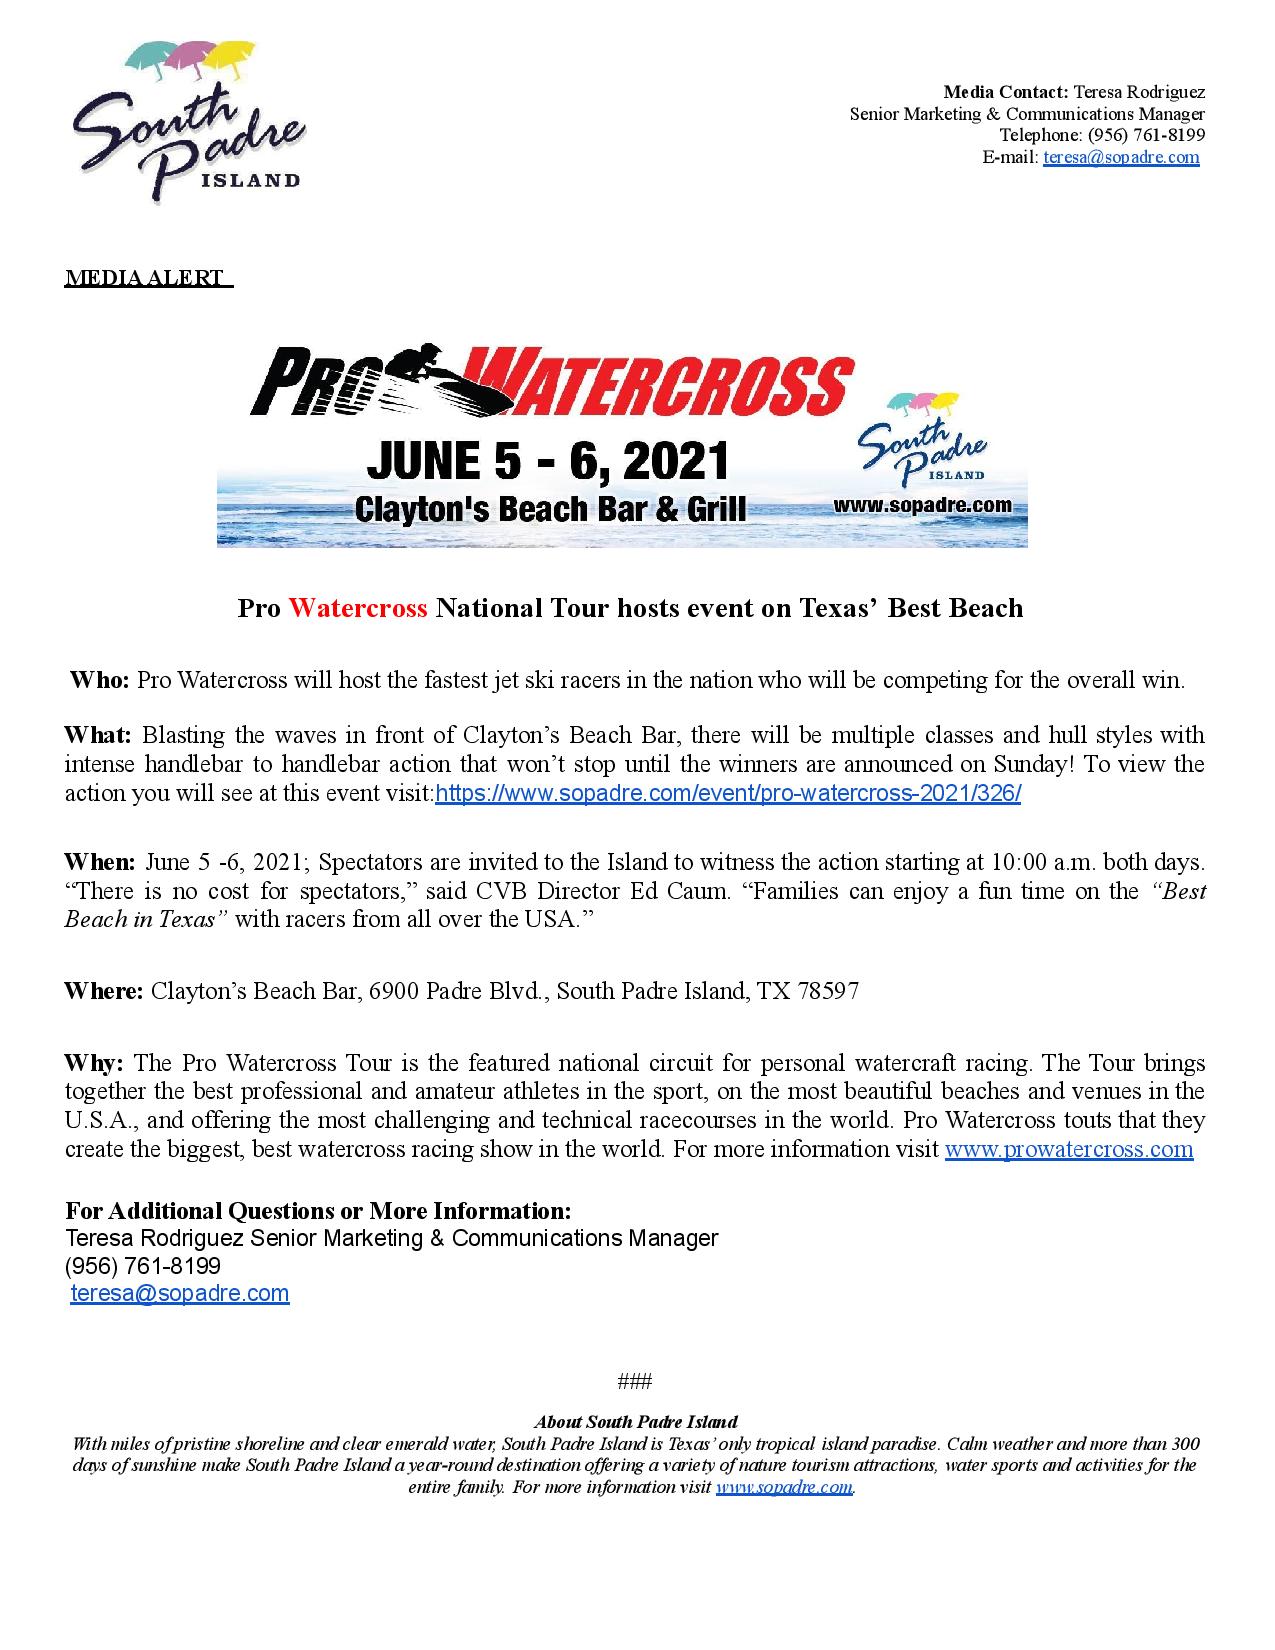 Pro Watercross National Tour hosts event on Texas' Best Beach